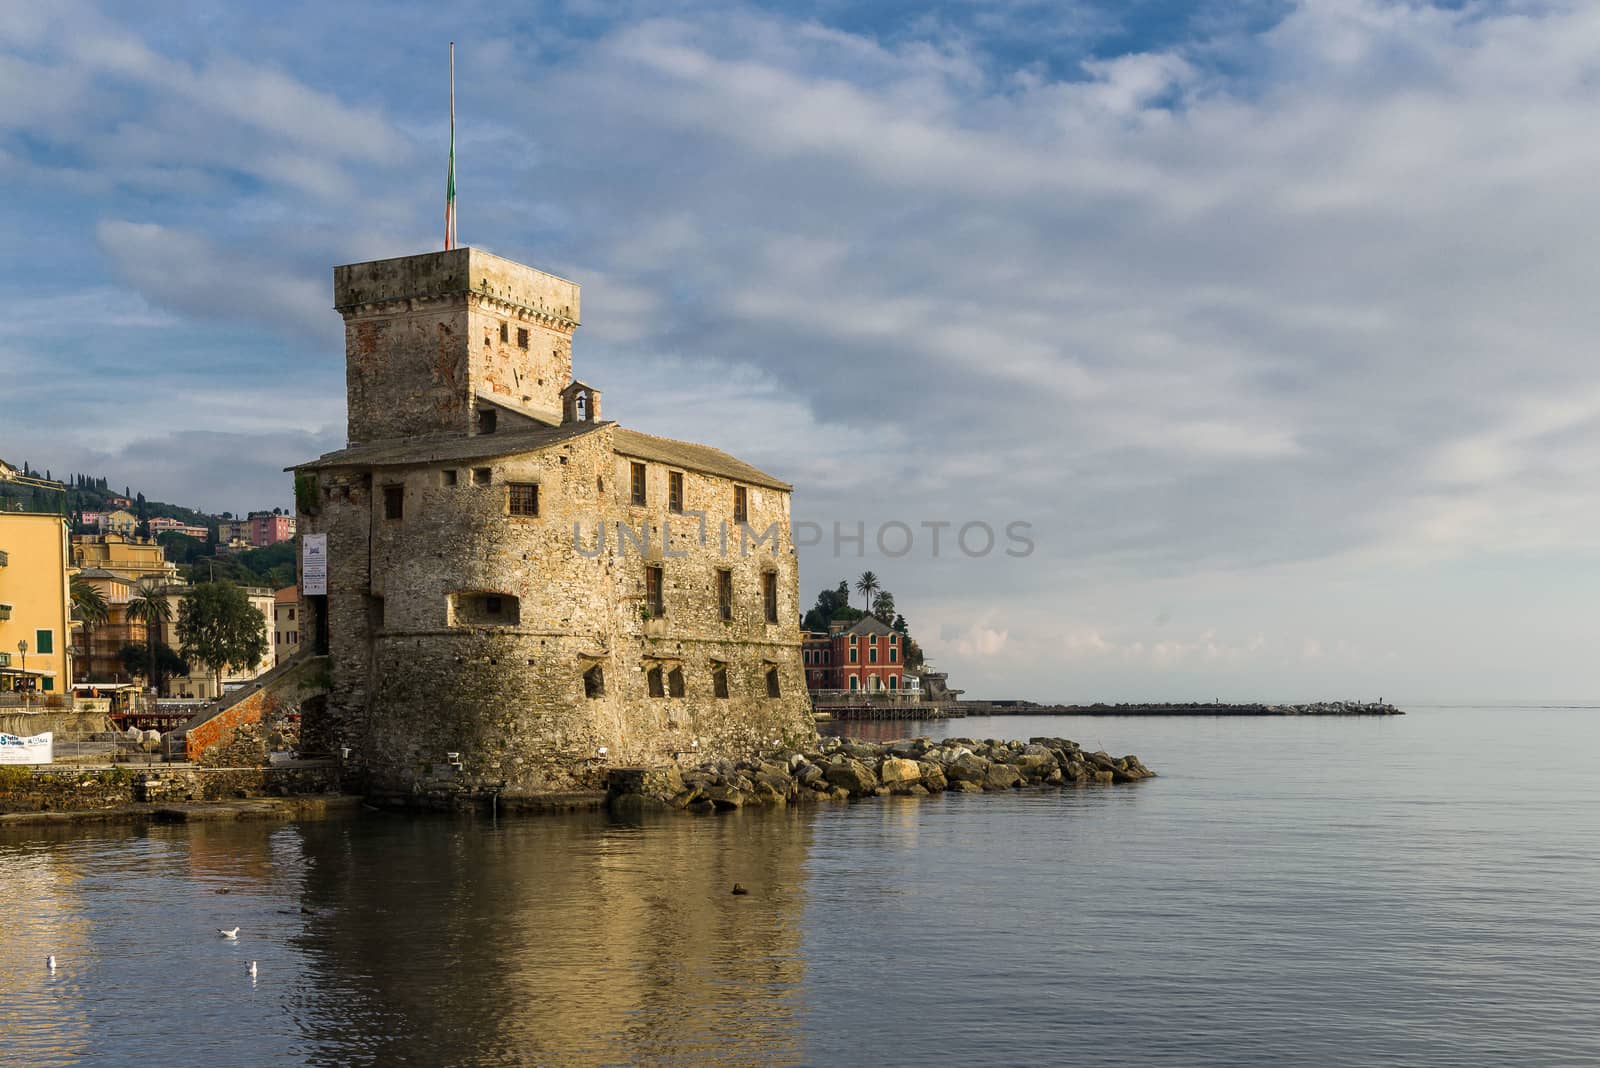 The ancient castle of Rapallo, built on the ligurian sea.